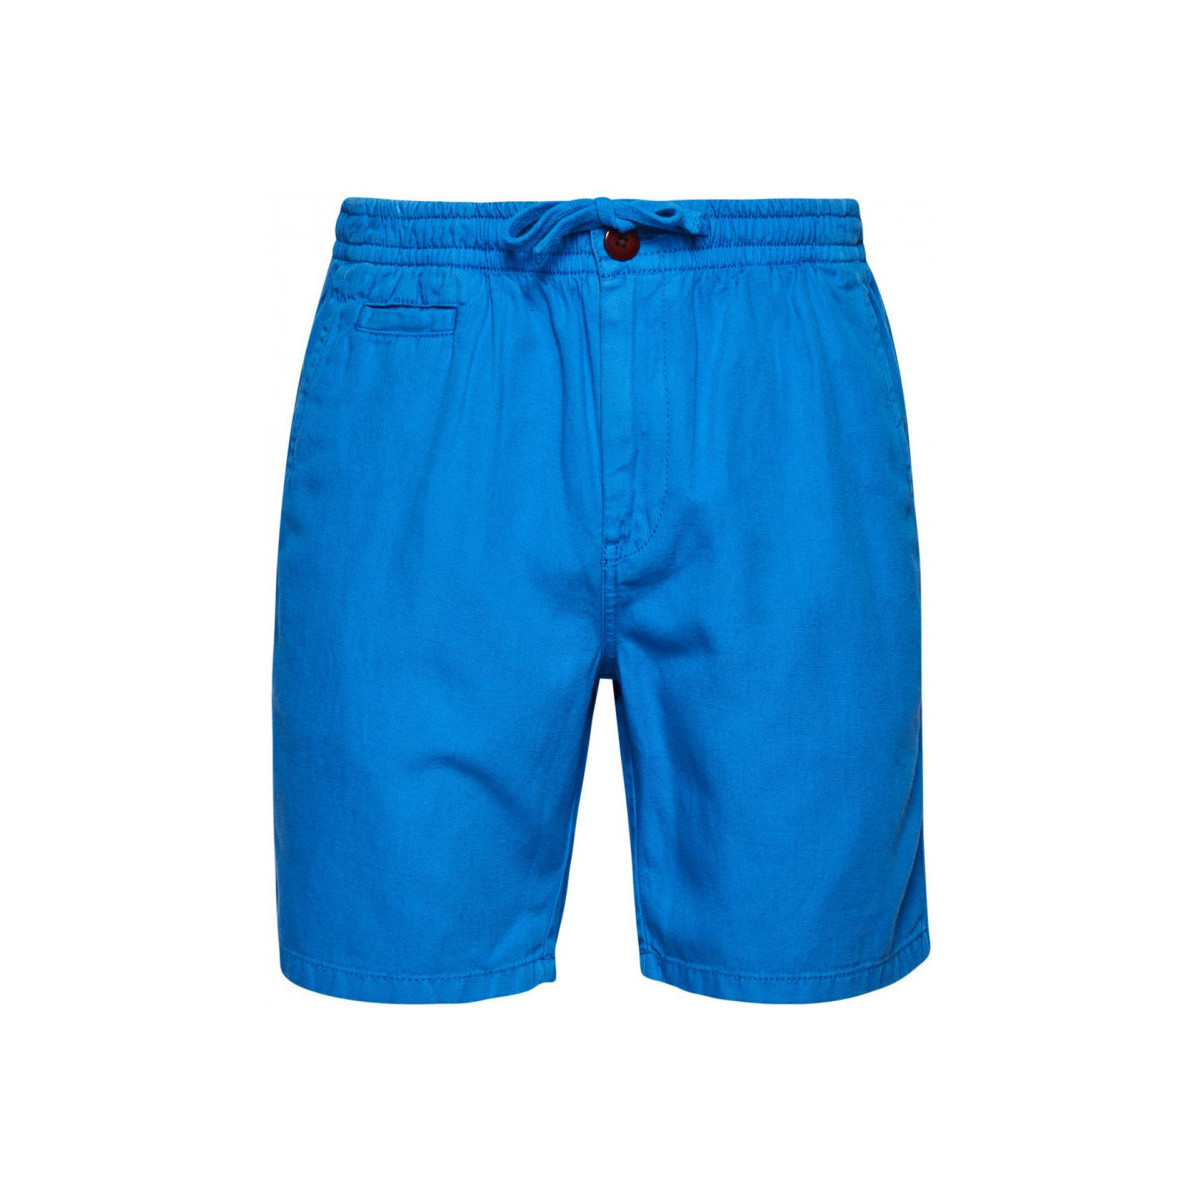 Oblačila Moški Kratke hlače & Bermuda Superdry Vintage overdyed Modra